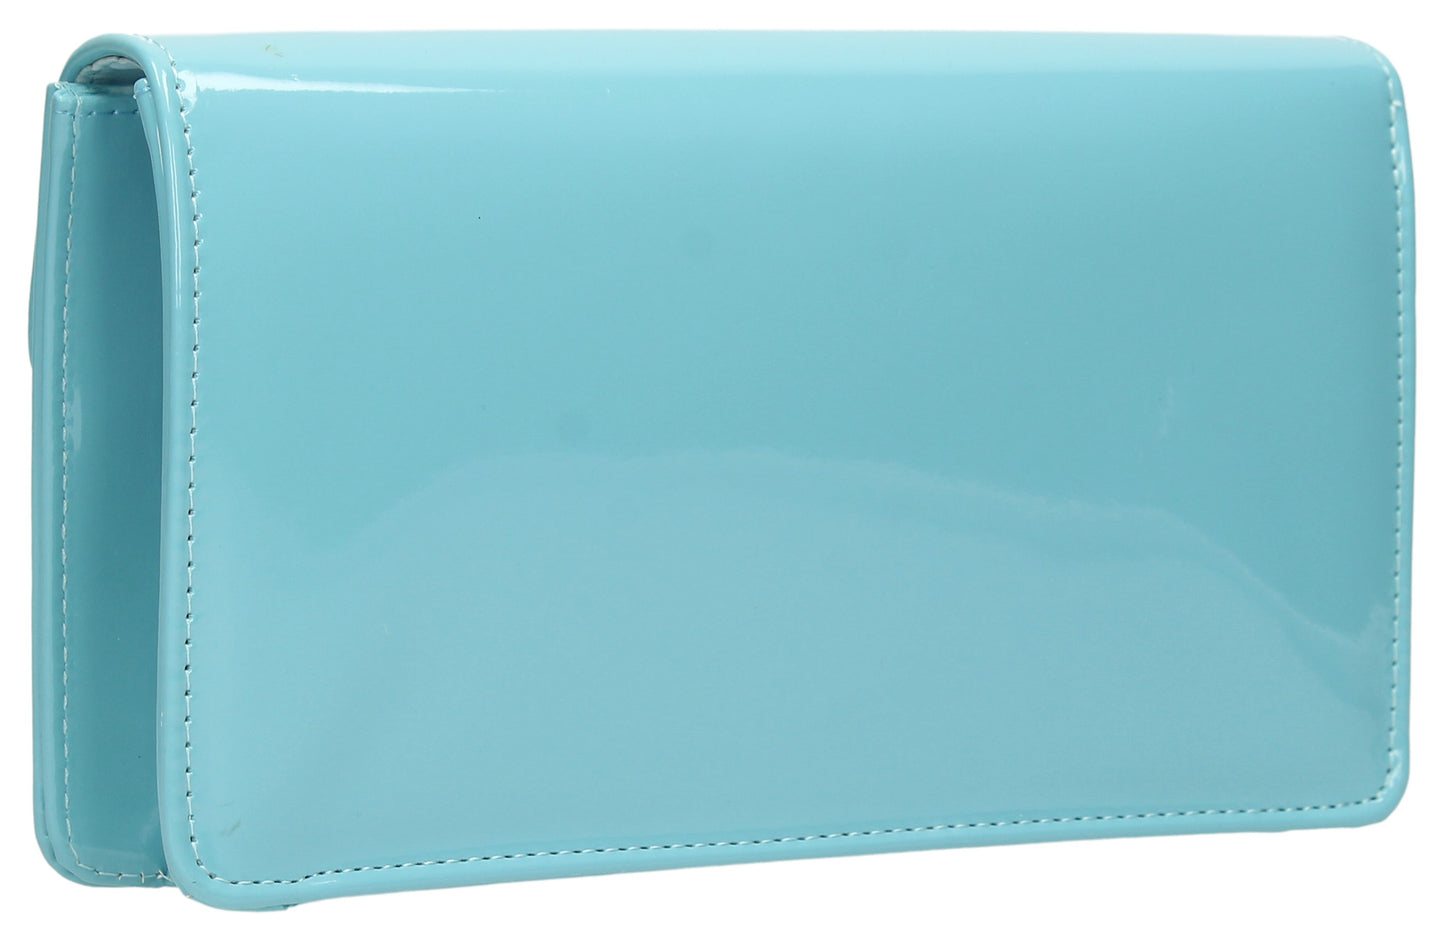 SWANKYSWANS Paris Clutch Bag Mint Blue Cute Cheap Clutch Bag For Weddings School and Work